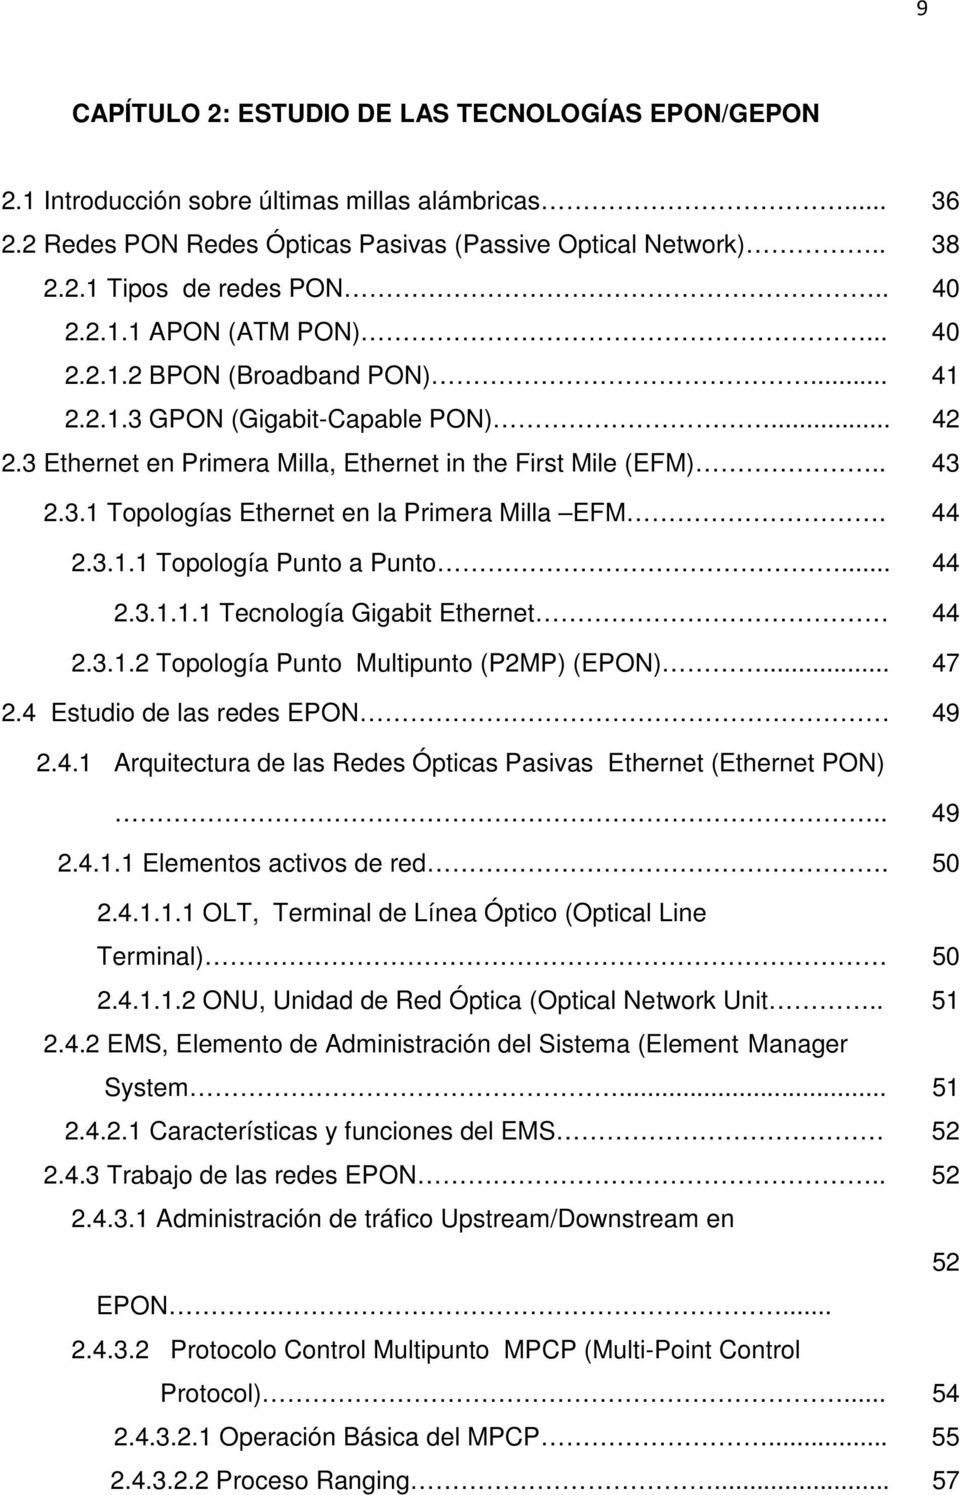 44 2.3.1.1 Topología Punto a Punto... 44 2.3.1.1.1 Tecnología Gigabit Ethernet 44 2.3.1.2 Topología Punto Multipunto (P2MP) (EPON)... 47 2.4 Estudio de las redes EPON 49 2.4.1 Arquitectura de las Redes Ópticas Pasivas Ethernet (Ethernet PON).